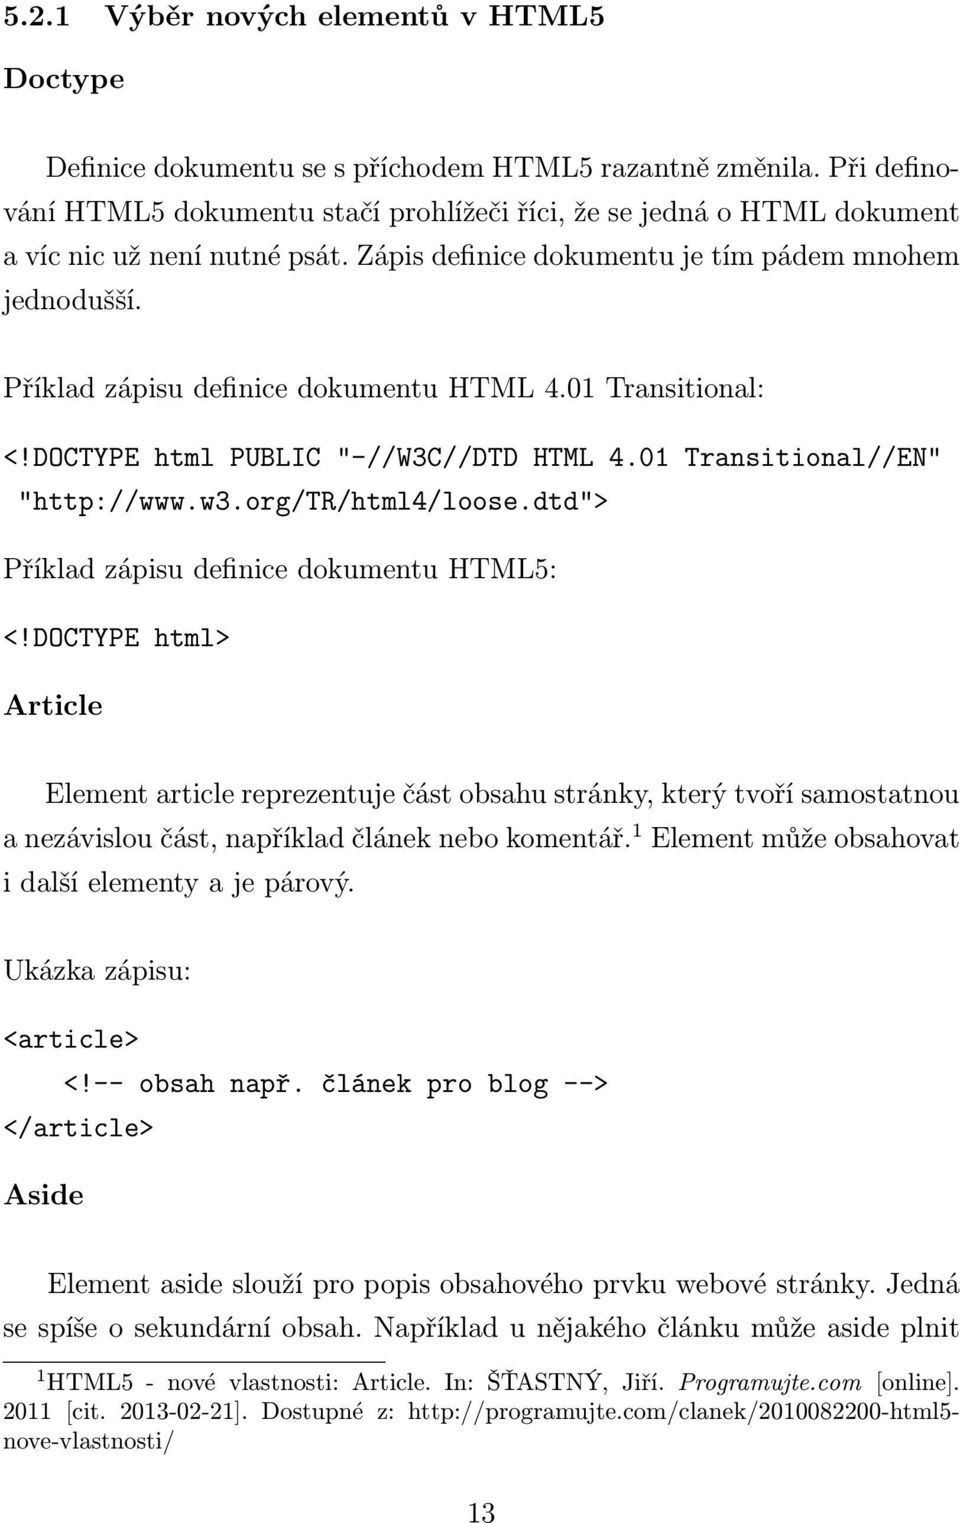 Příklad zápisu definice dokumentu HTML 4.01 Transitional: <!DOCTYPE html PUBLIC "-//W3C//DTD HTML 4.01 Transitional//EN" "http://www.w3.org/tr/html4/loose.